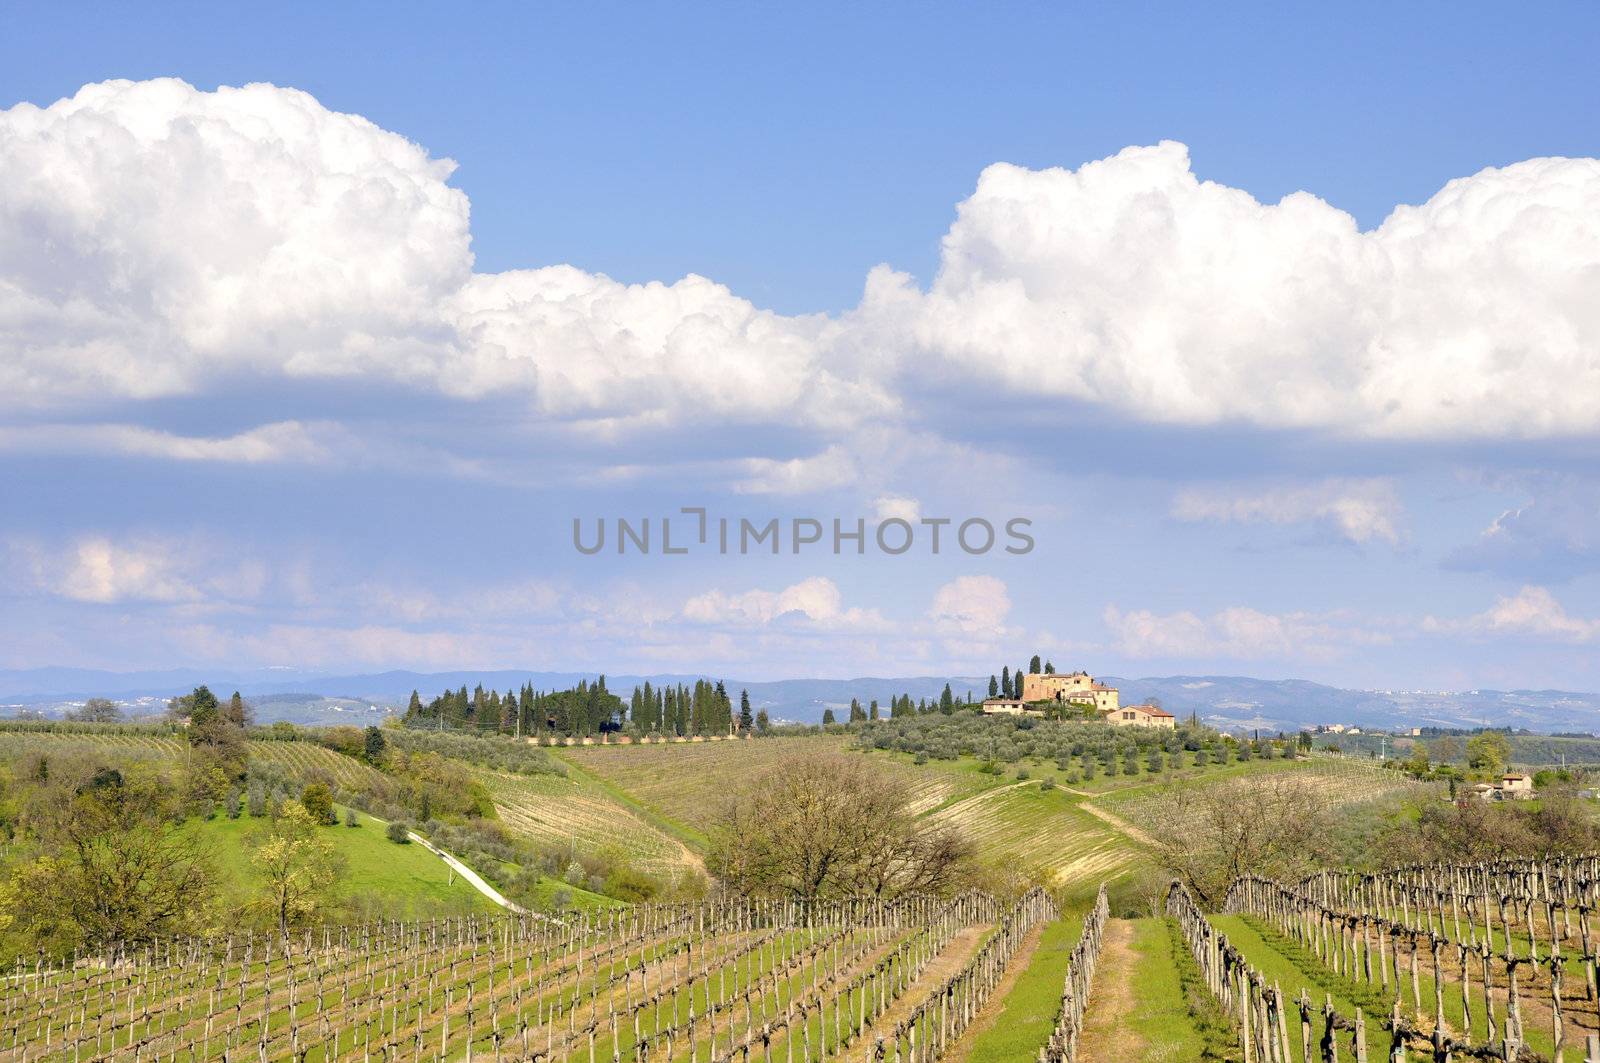 Vineyard in Tuscany, Italy by dutourdumonde